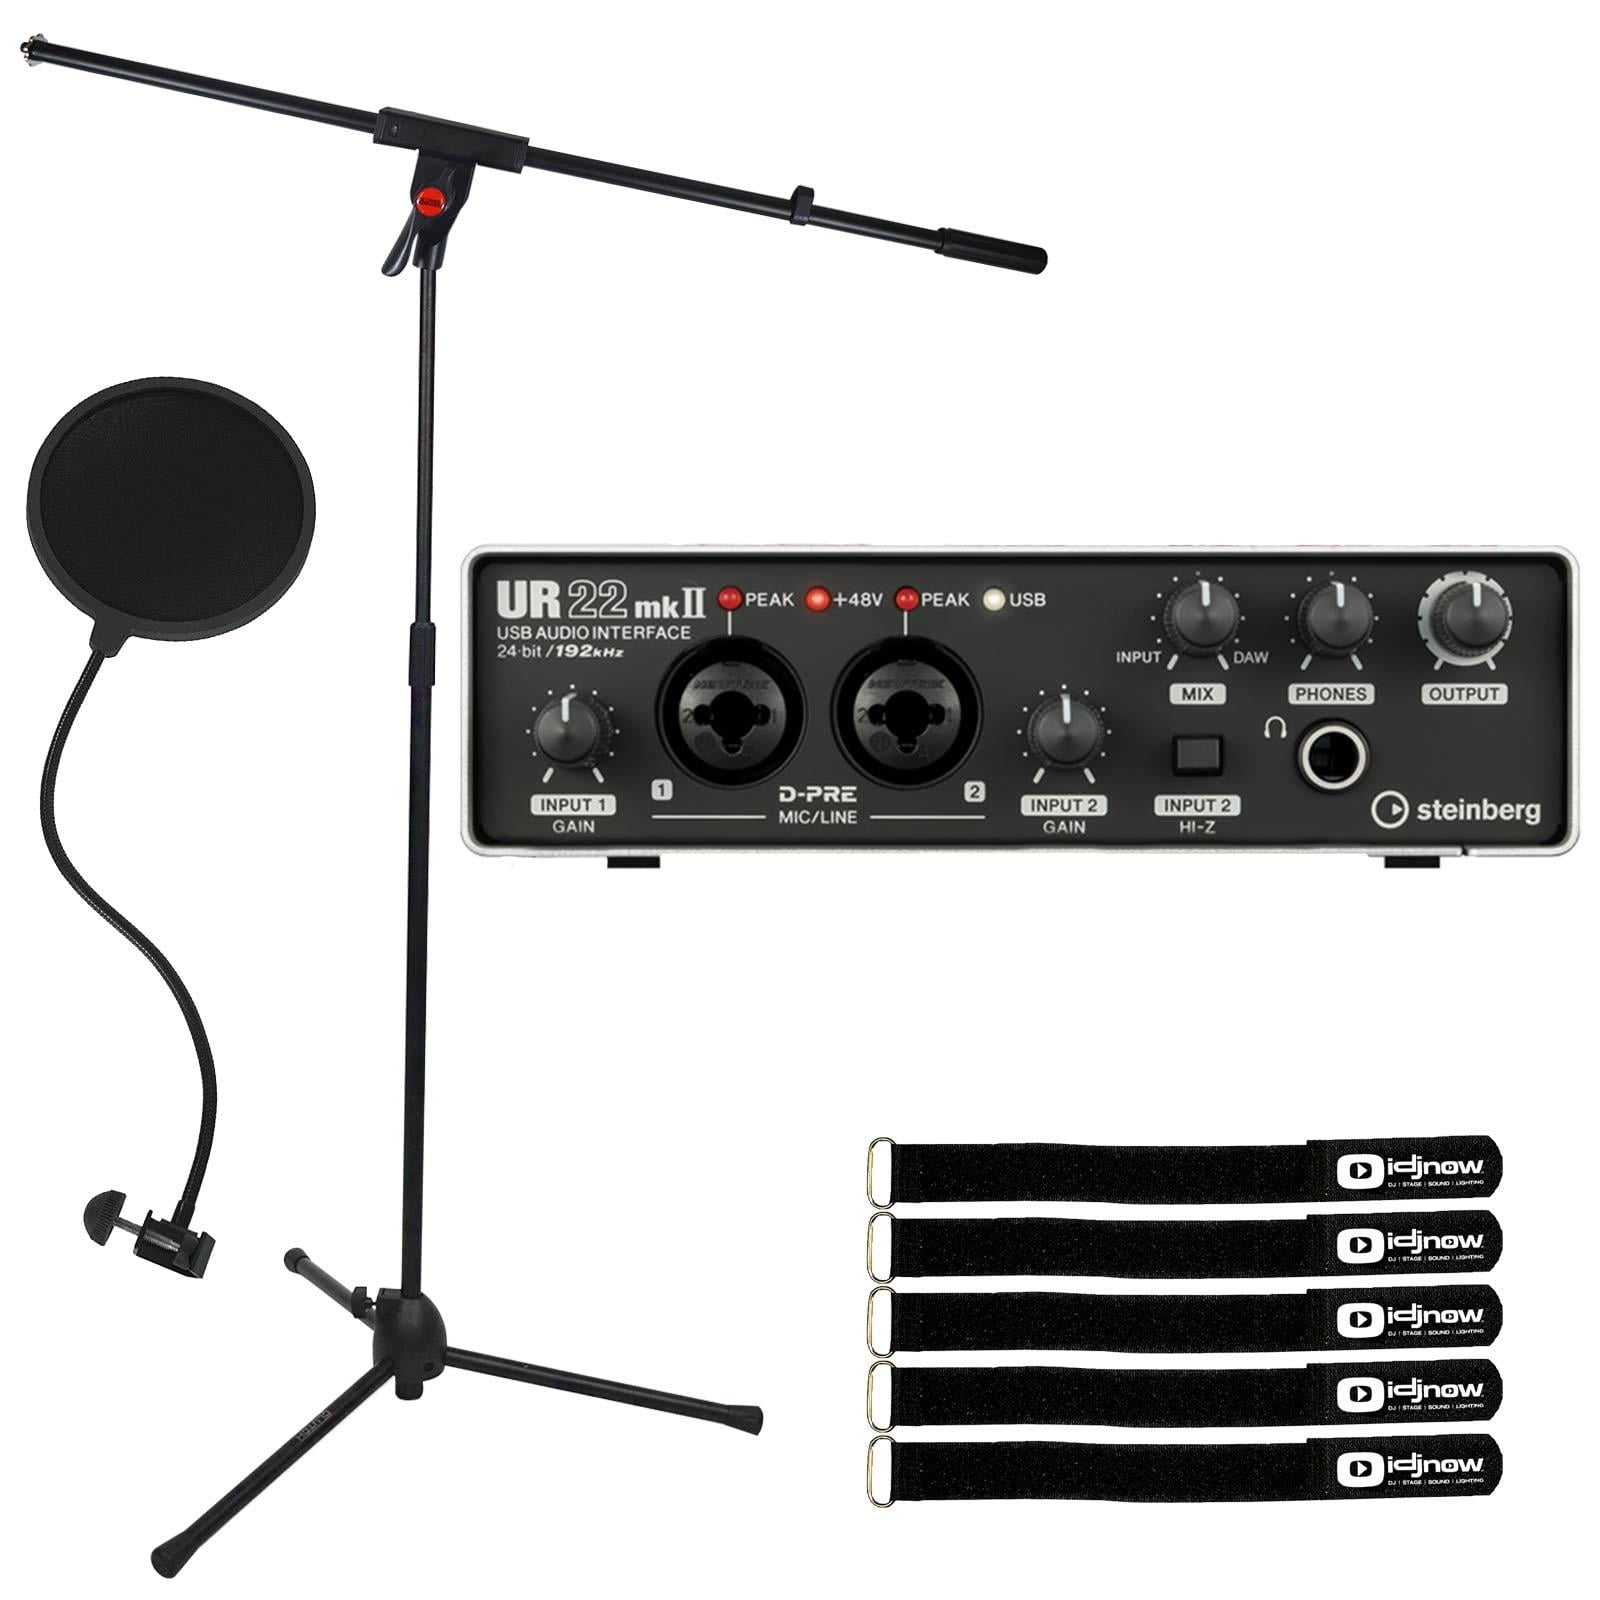 Steinberg UR22 MKII 2.0 Audio Interface Microphone Boom Stand Package Walmart.com